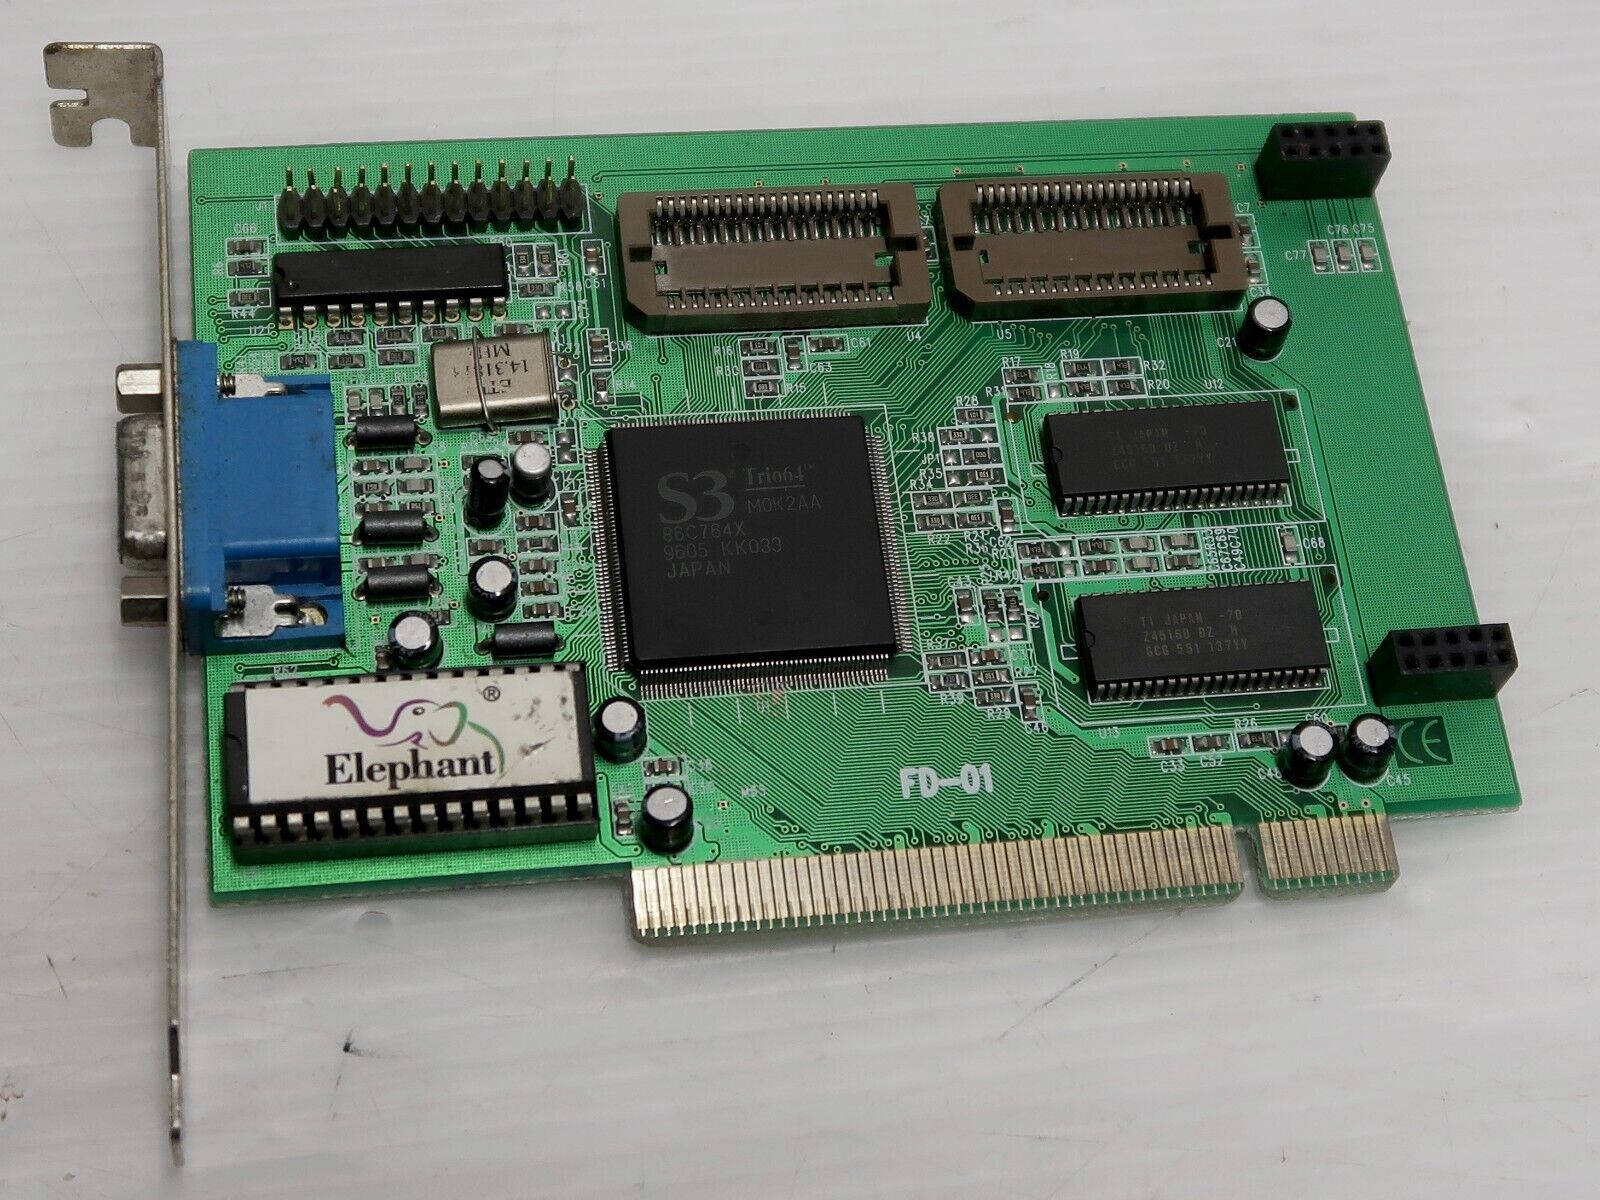 S3 Trio64, 86C764X, VRAM 1MB, PCI, VGA, Elephant FD-01, WORKING VINTAGE CARD